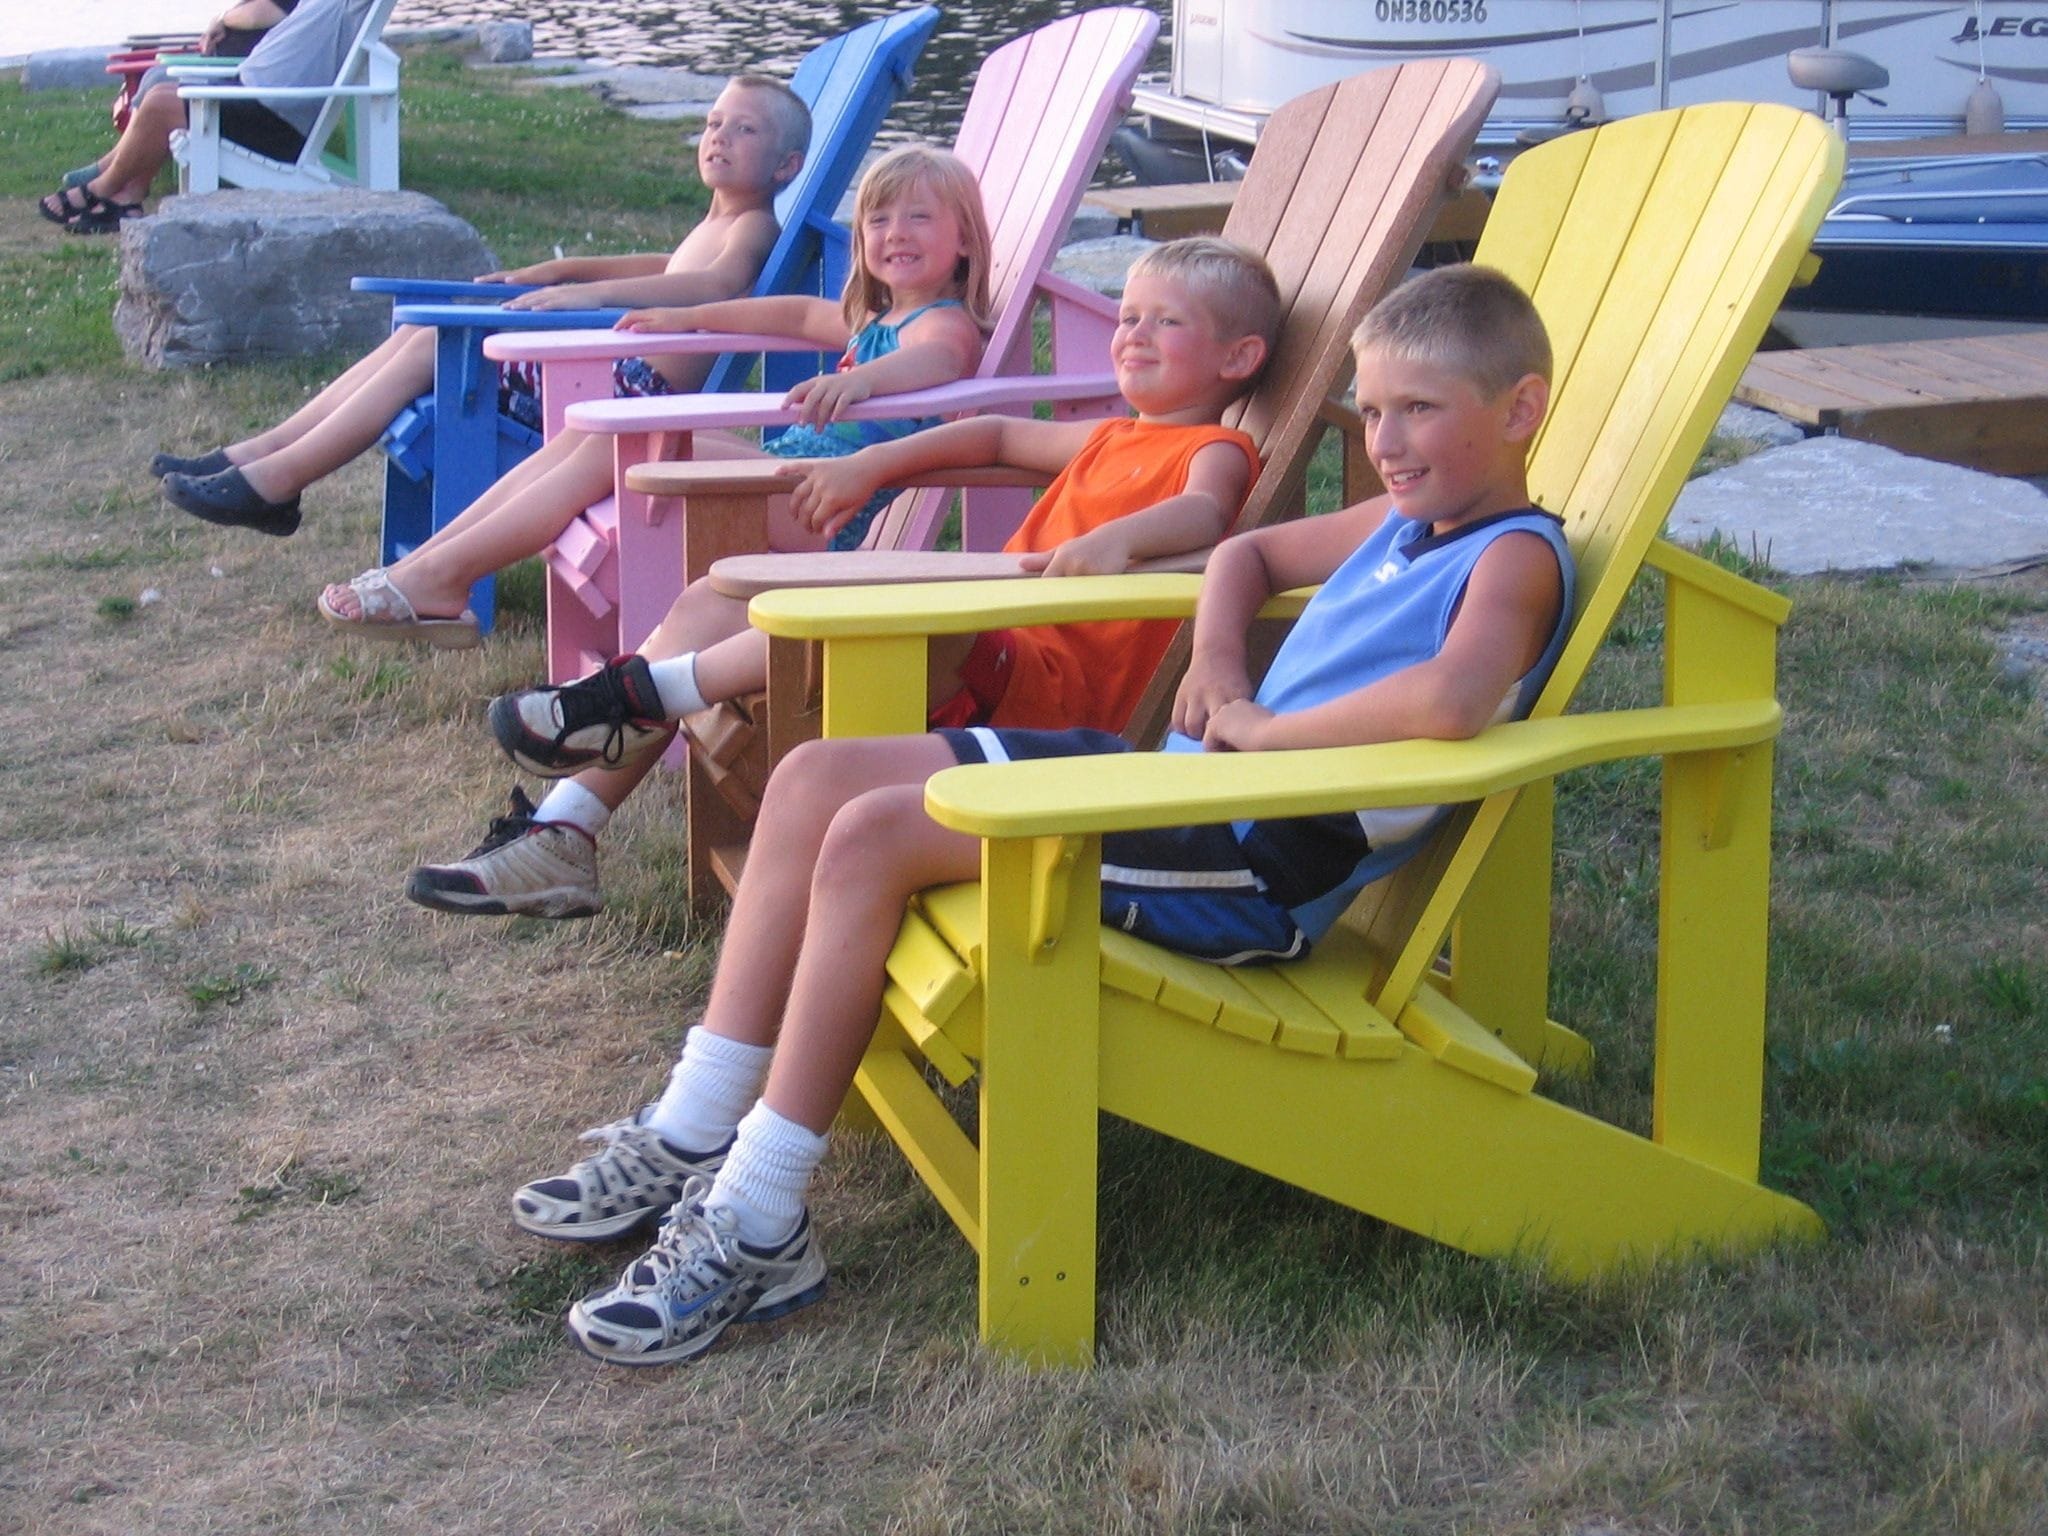 Kids Sitting on Adirondack Chairs